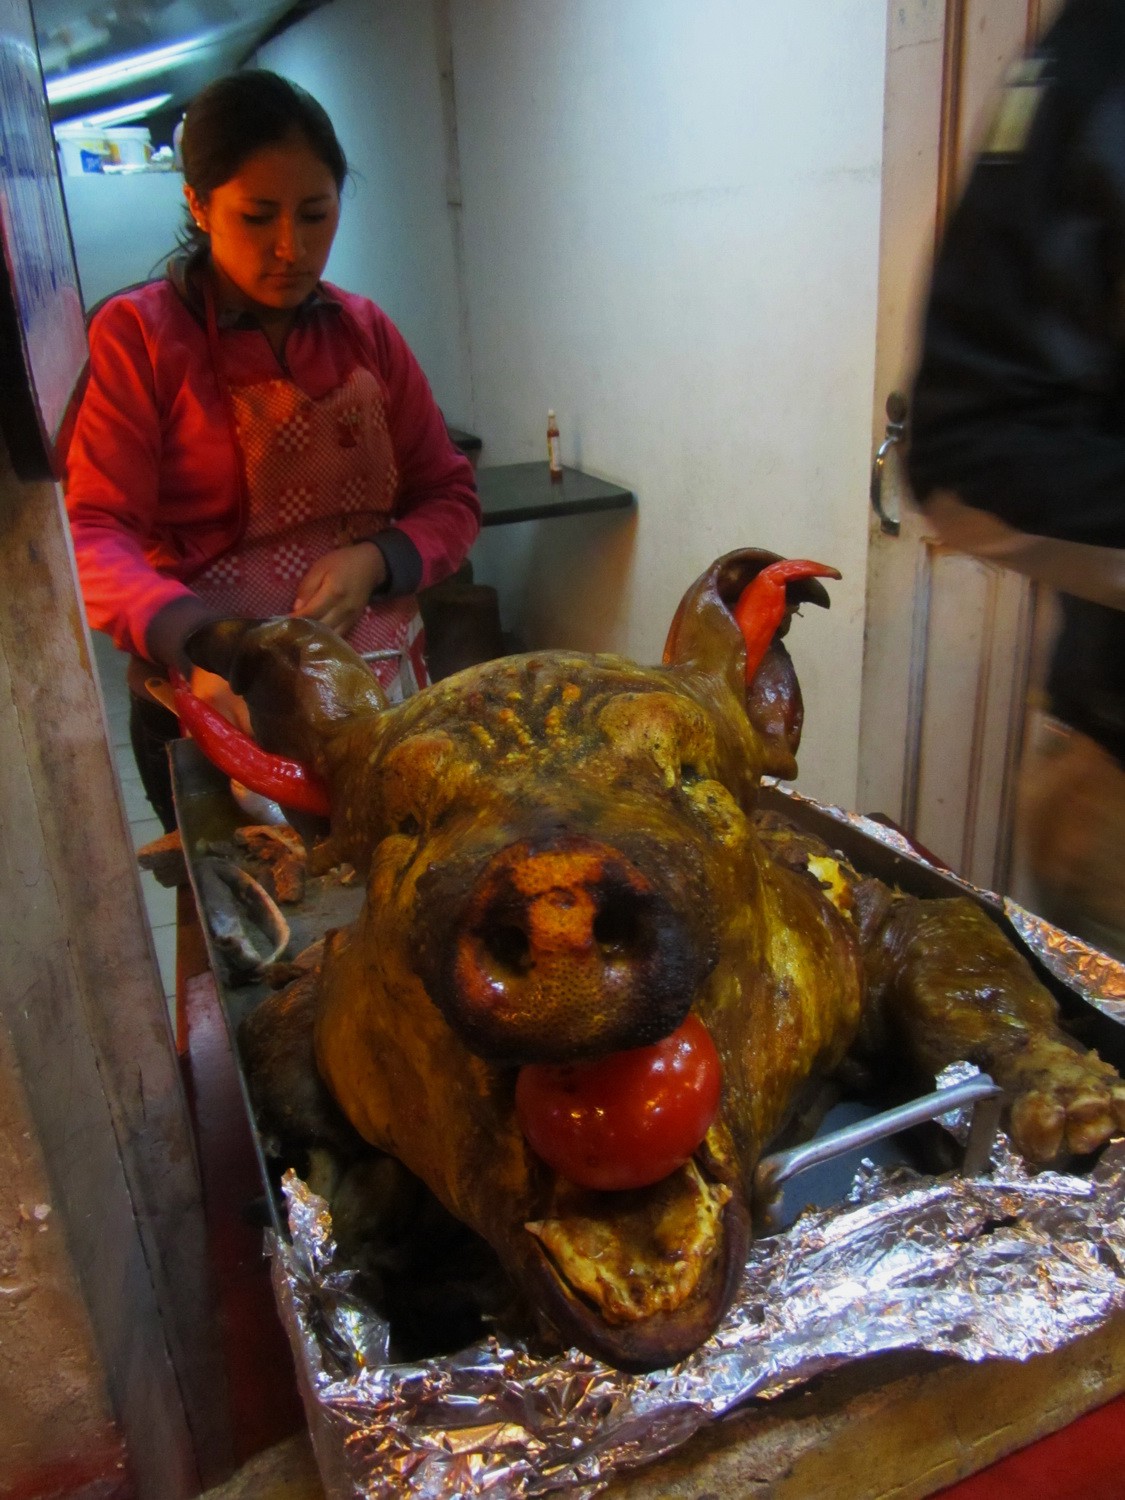 Pork in Otavalo - delicious!